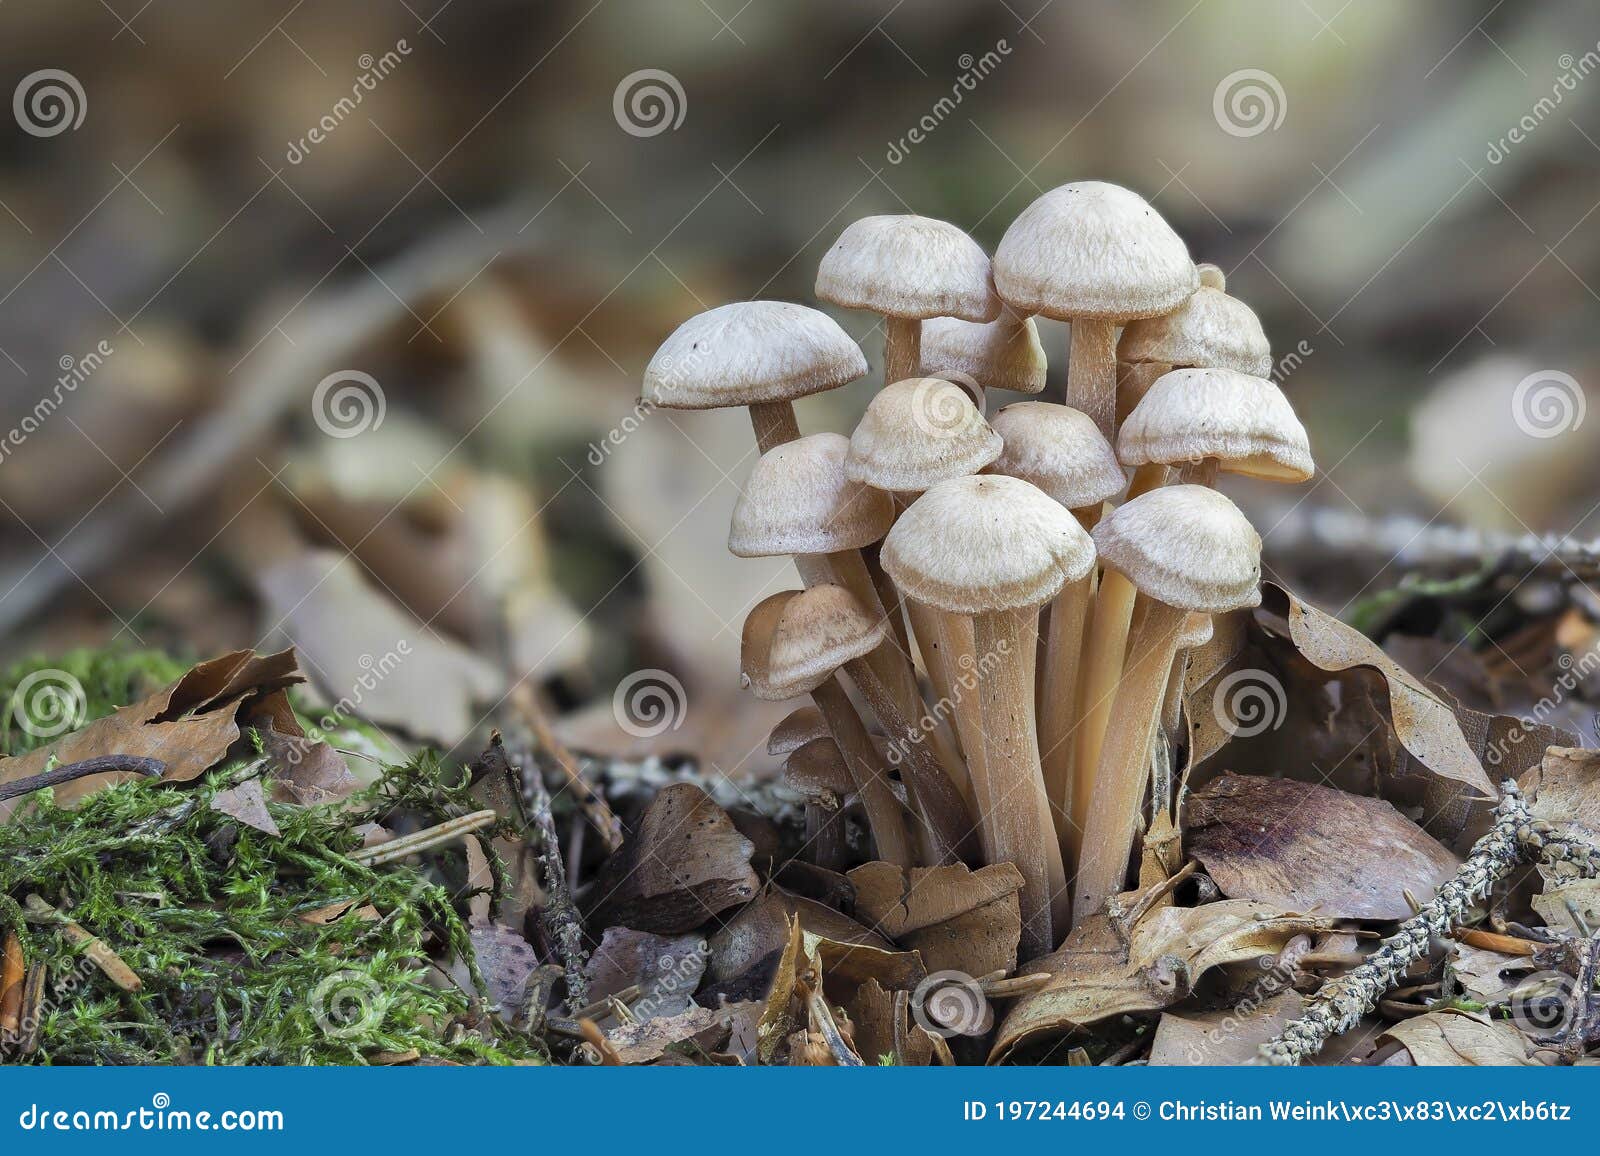 the clustered toughshank gymnopus confluens is an edible mushroom